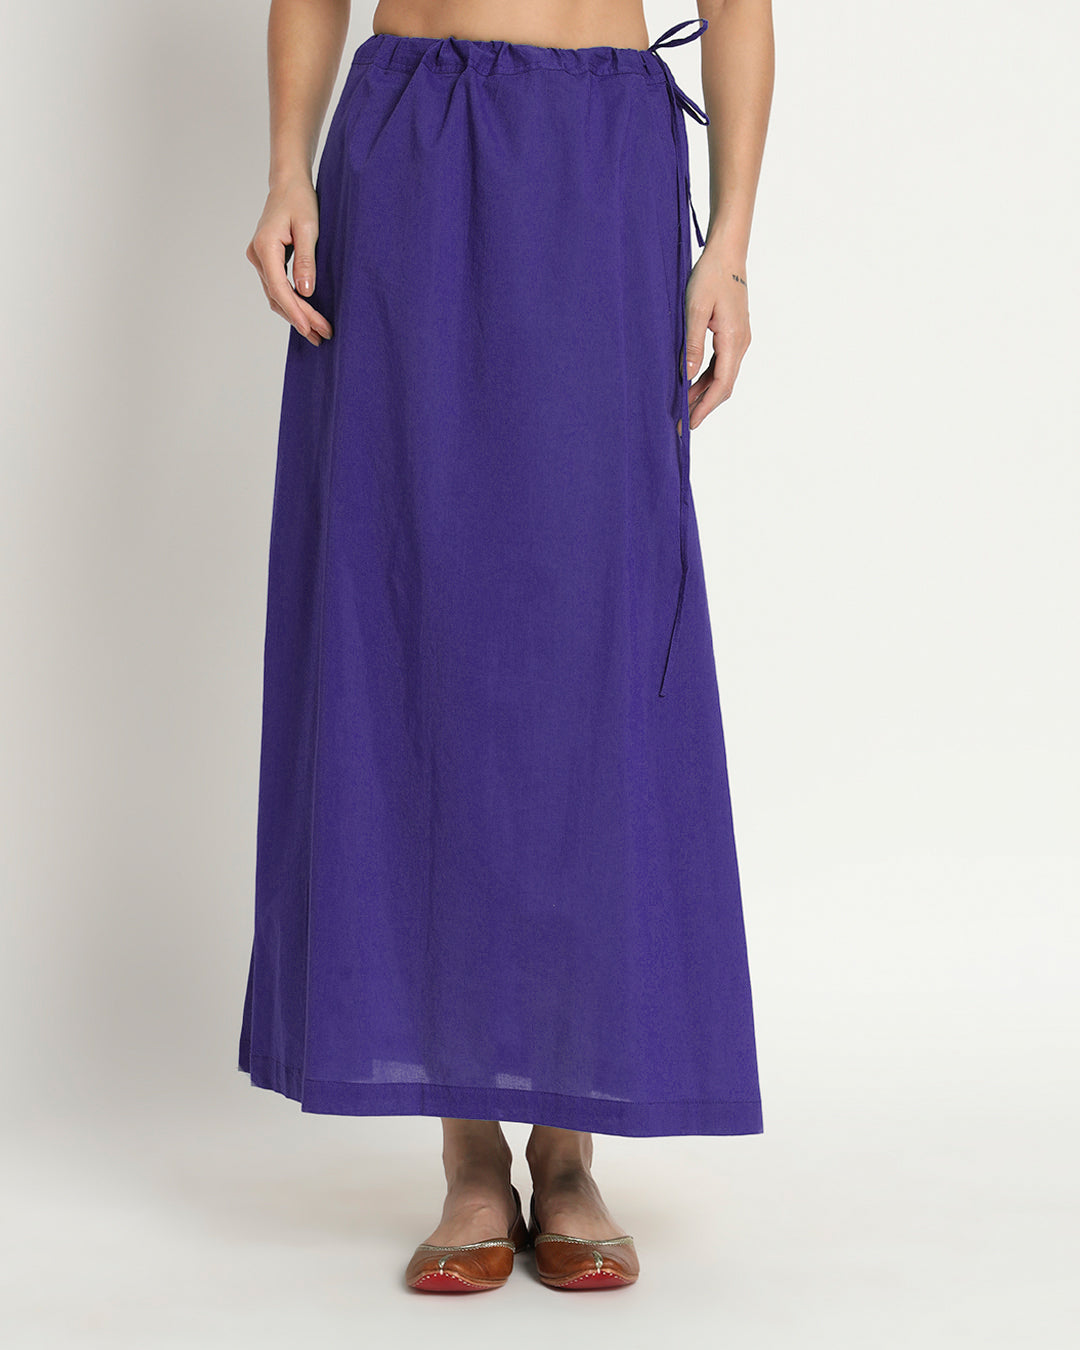 Combo: Beige & Aurora Purple Peekaboo Petticoat- Set of 2